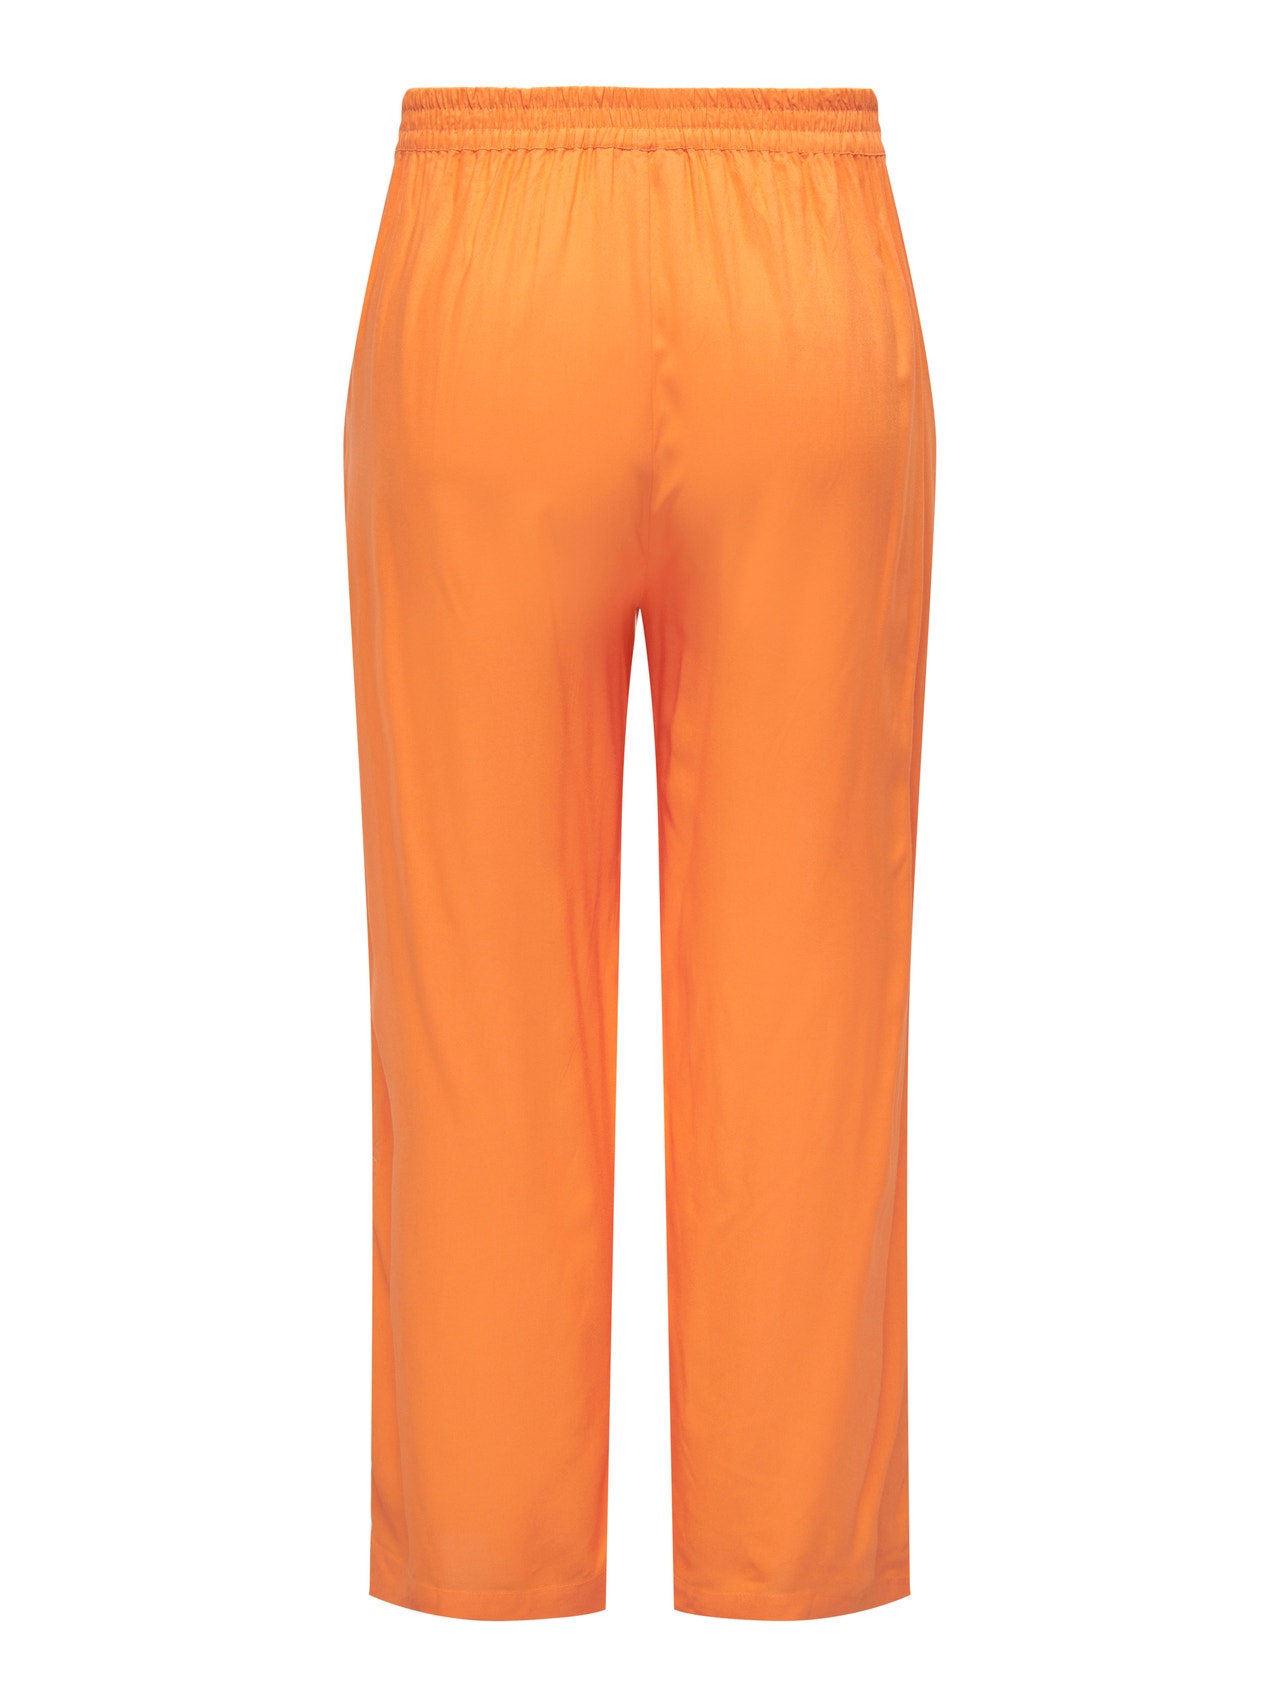 ONLY Normal geschnitten Mittlere Taille Hose -Orange Peel - 15290396